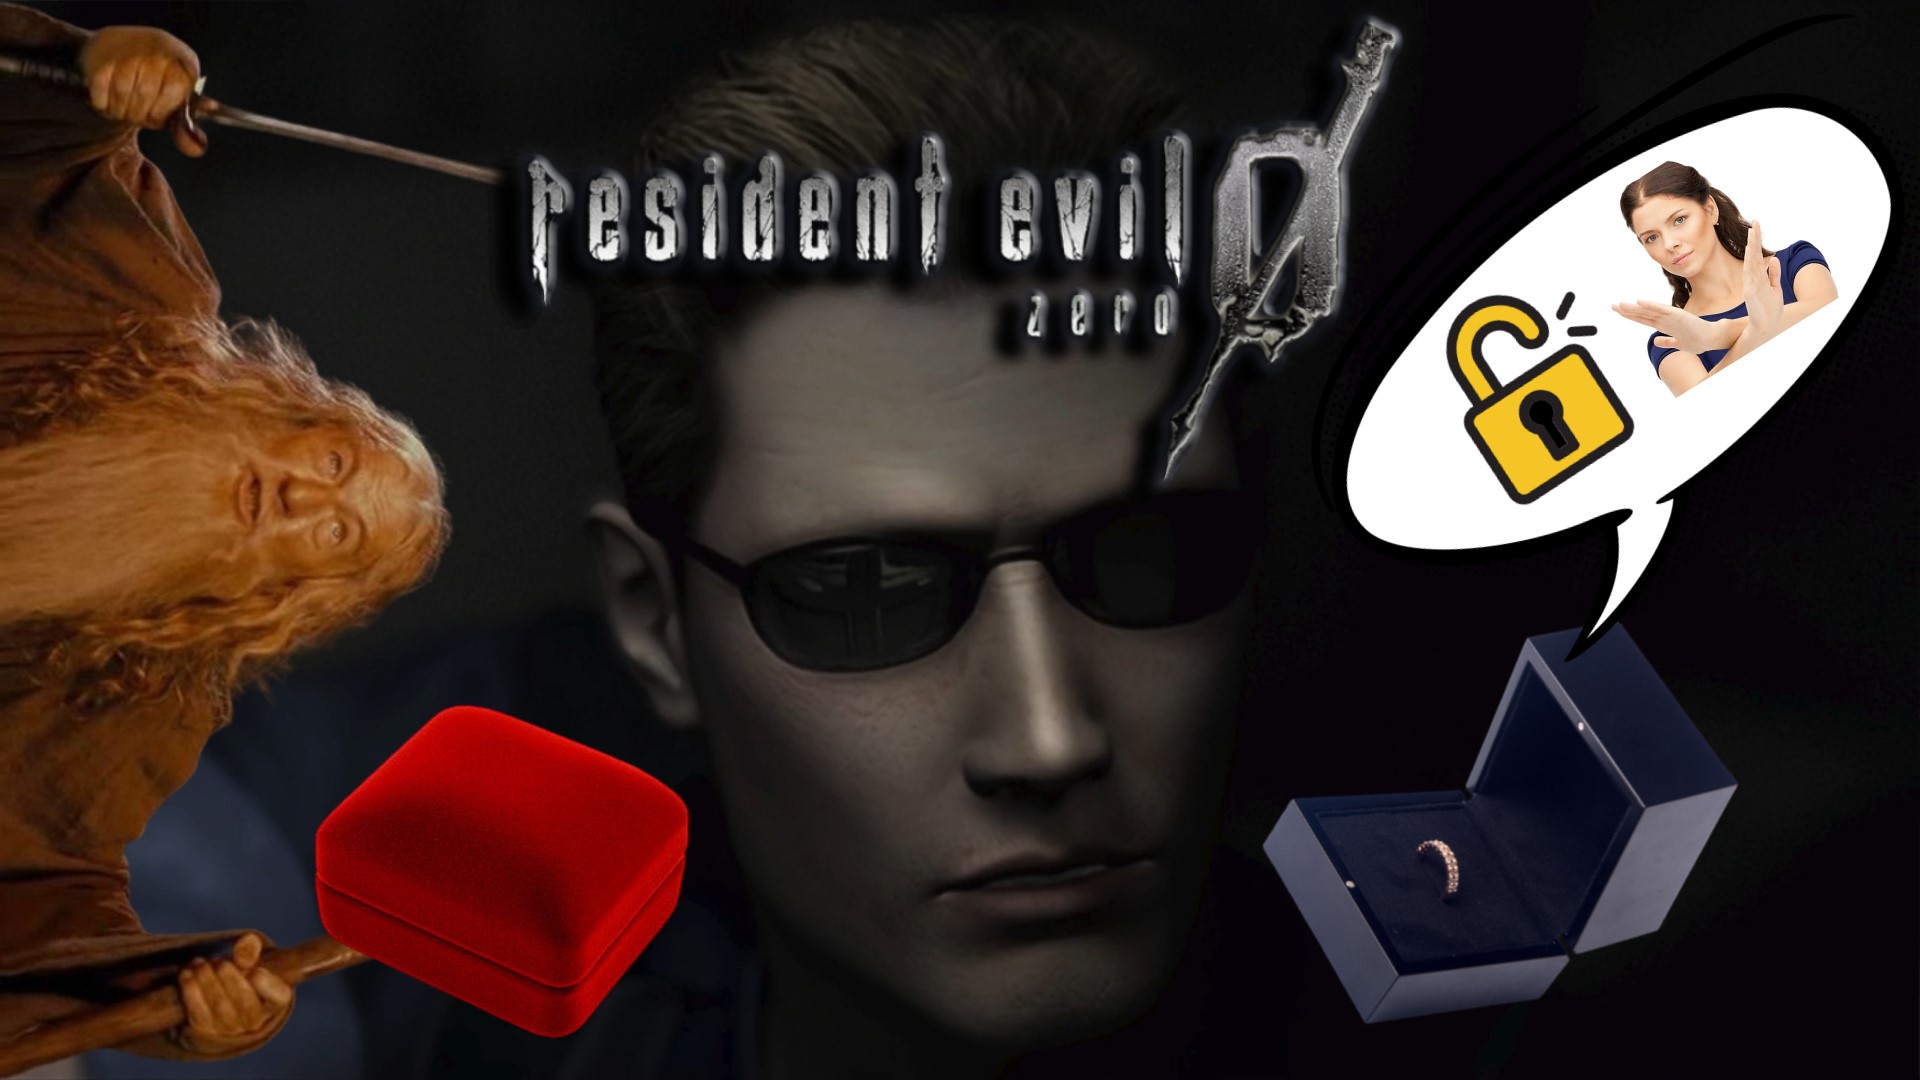 ШКАТУЛКА С СУЩНОСТЬЮ ГЕНДАЛЬФА ▻ Resident Evil Zero #3